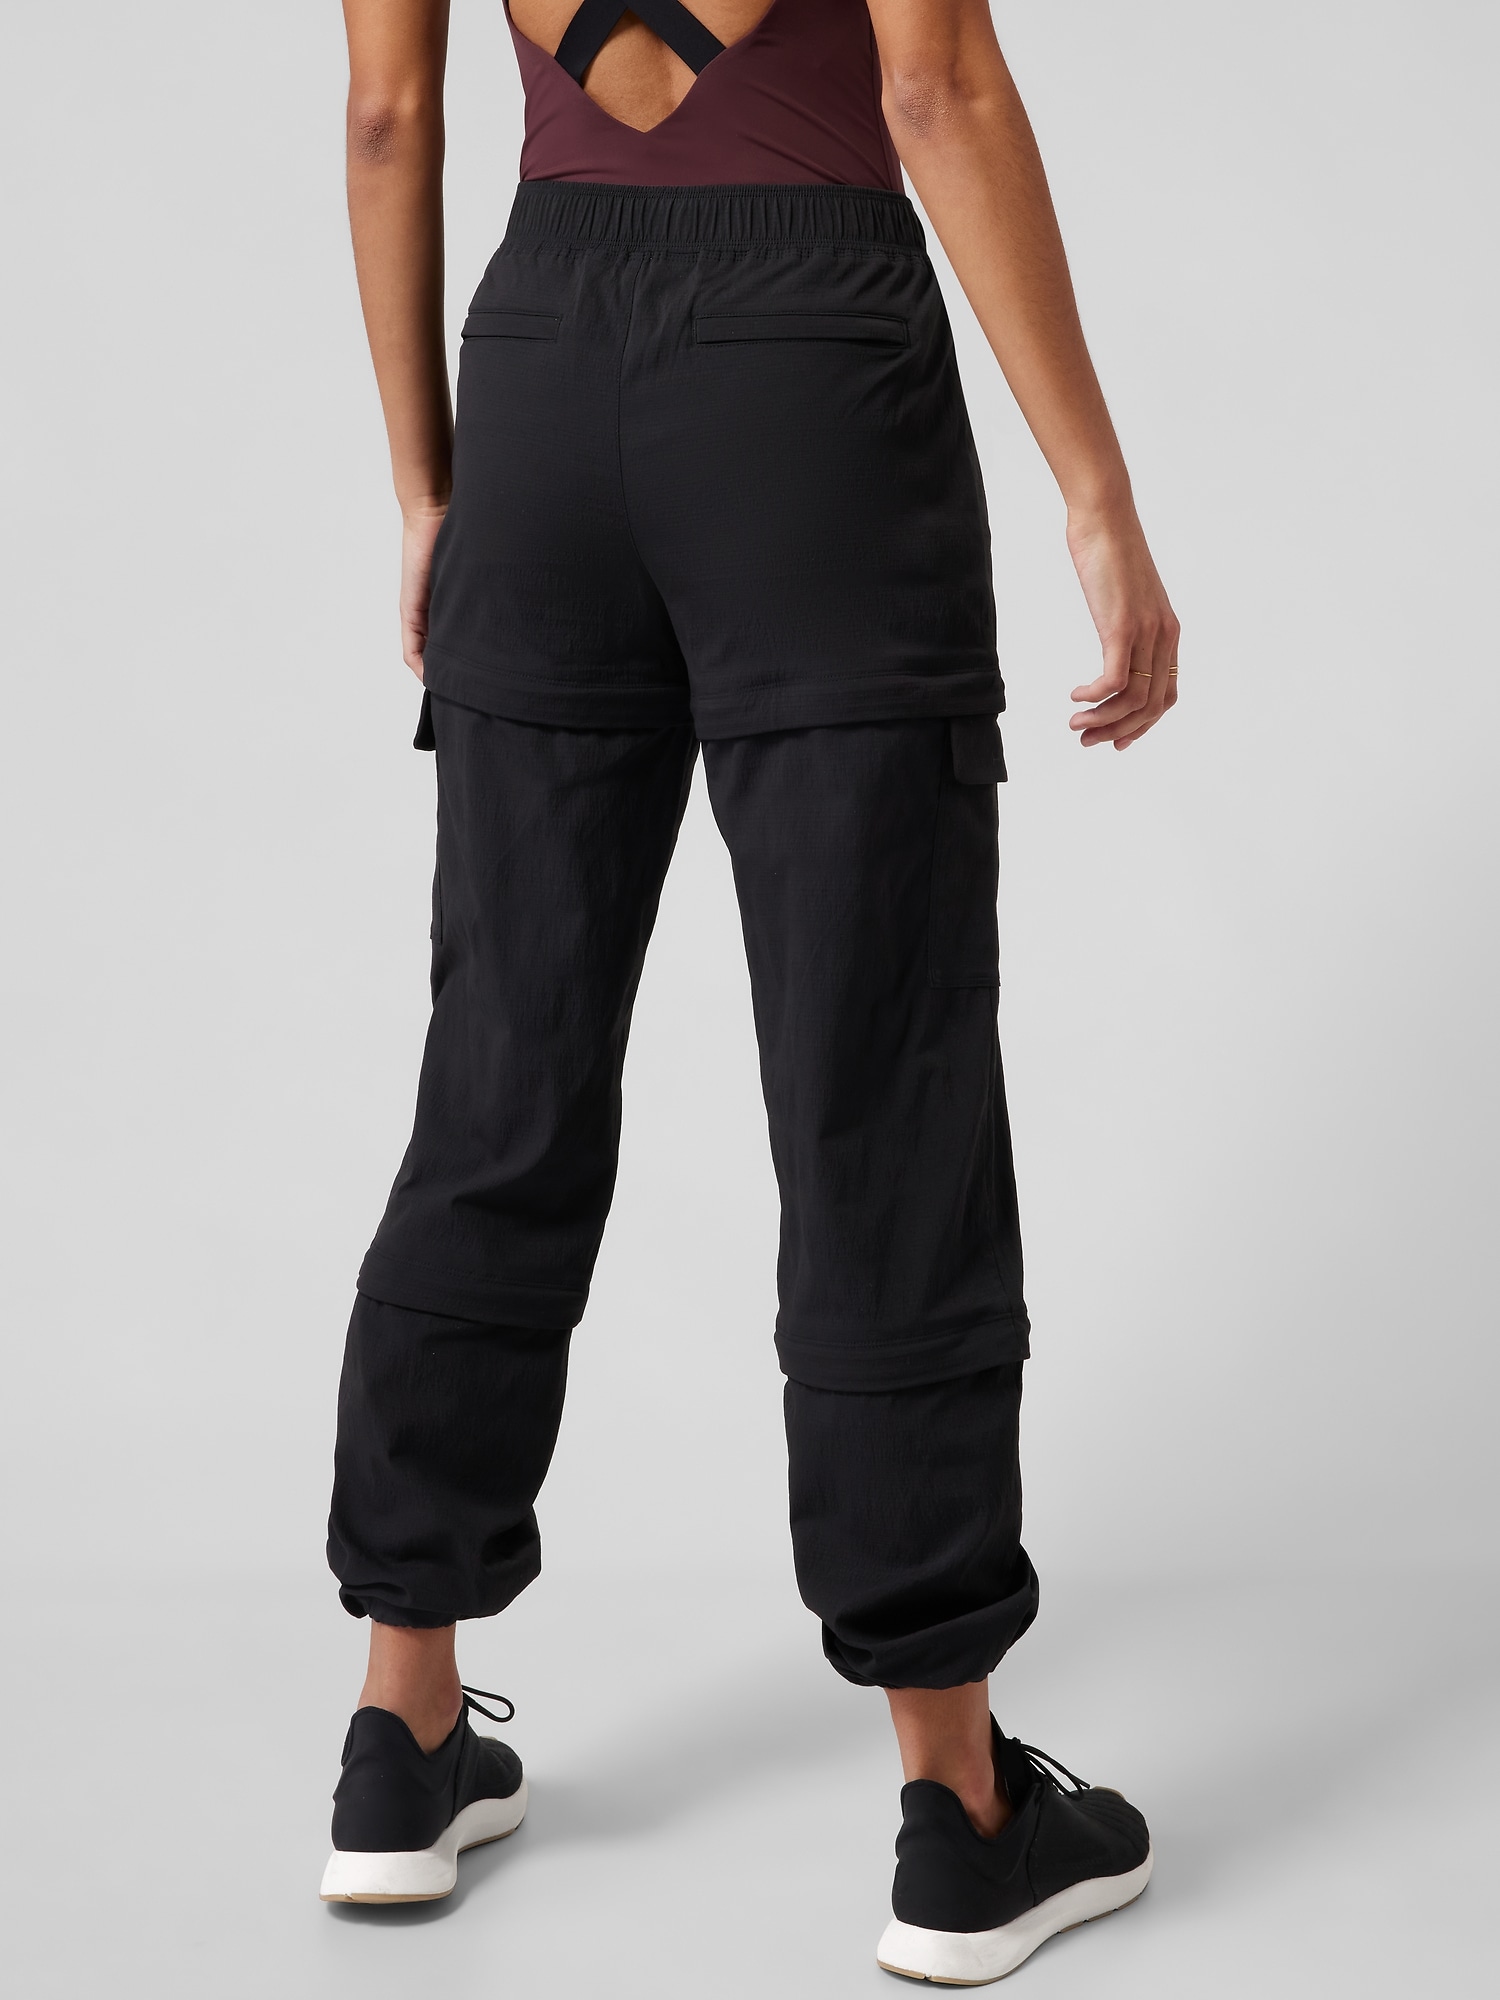 ATHLETA Gray Jogger Pants - Size 2 ZIp Pockets, Back Pockets Pull On Zip  Legs